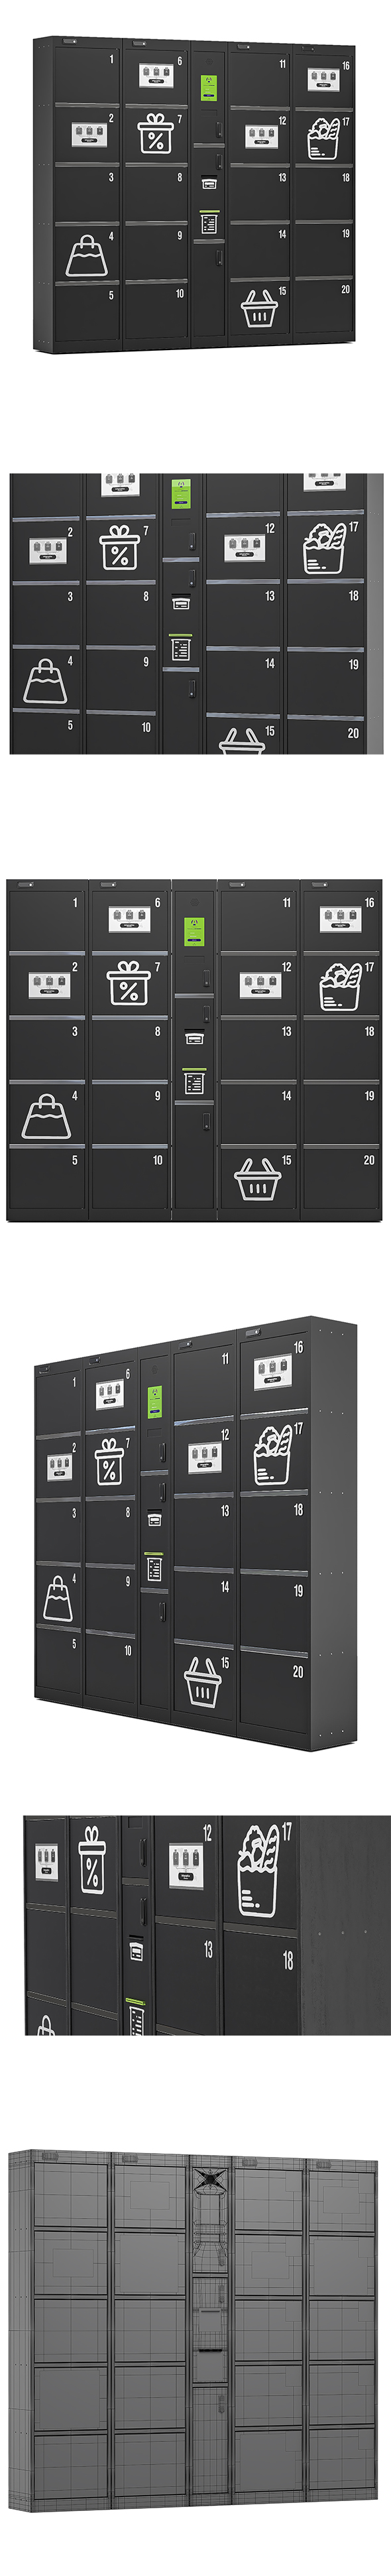 Automatic Luggage Storage